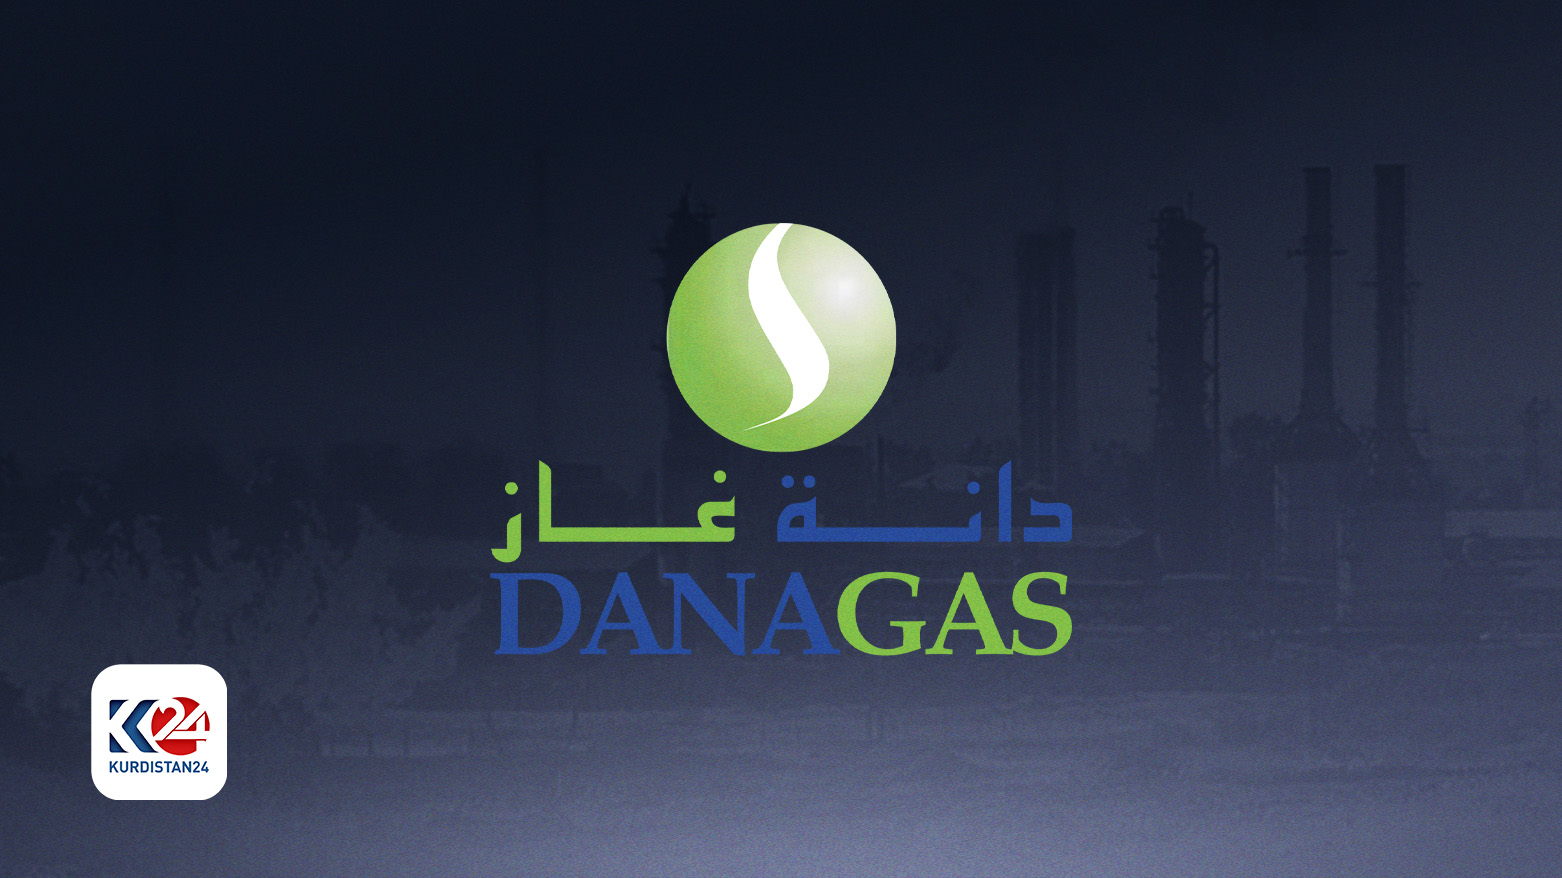 The logo of Dana Gas. (Photo: Designed by Kurdistan24)